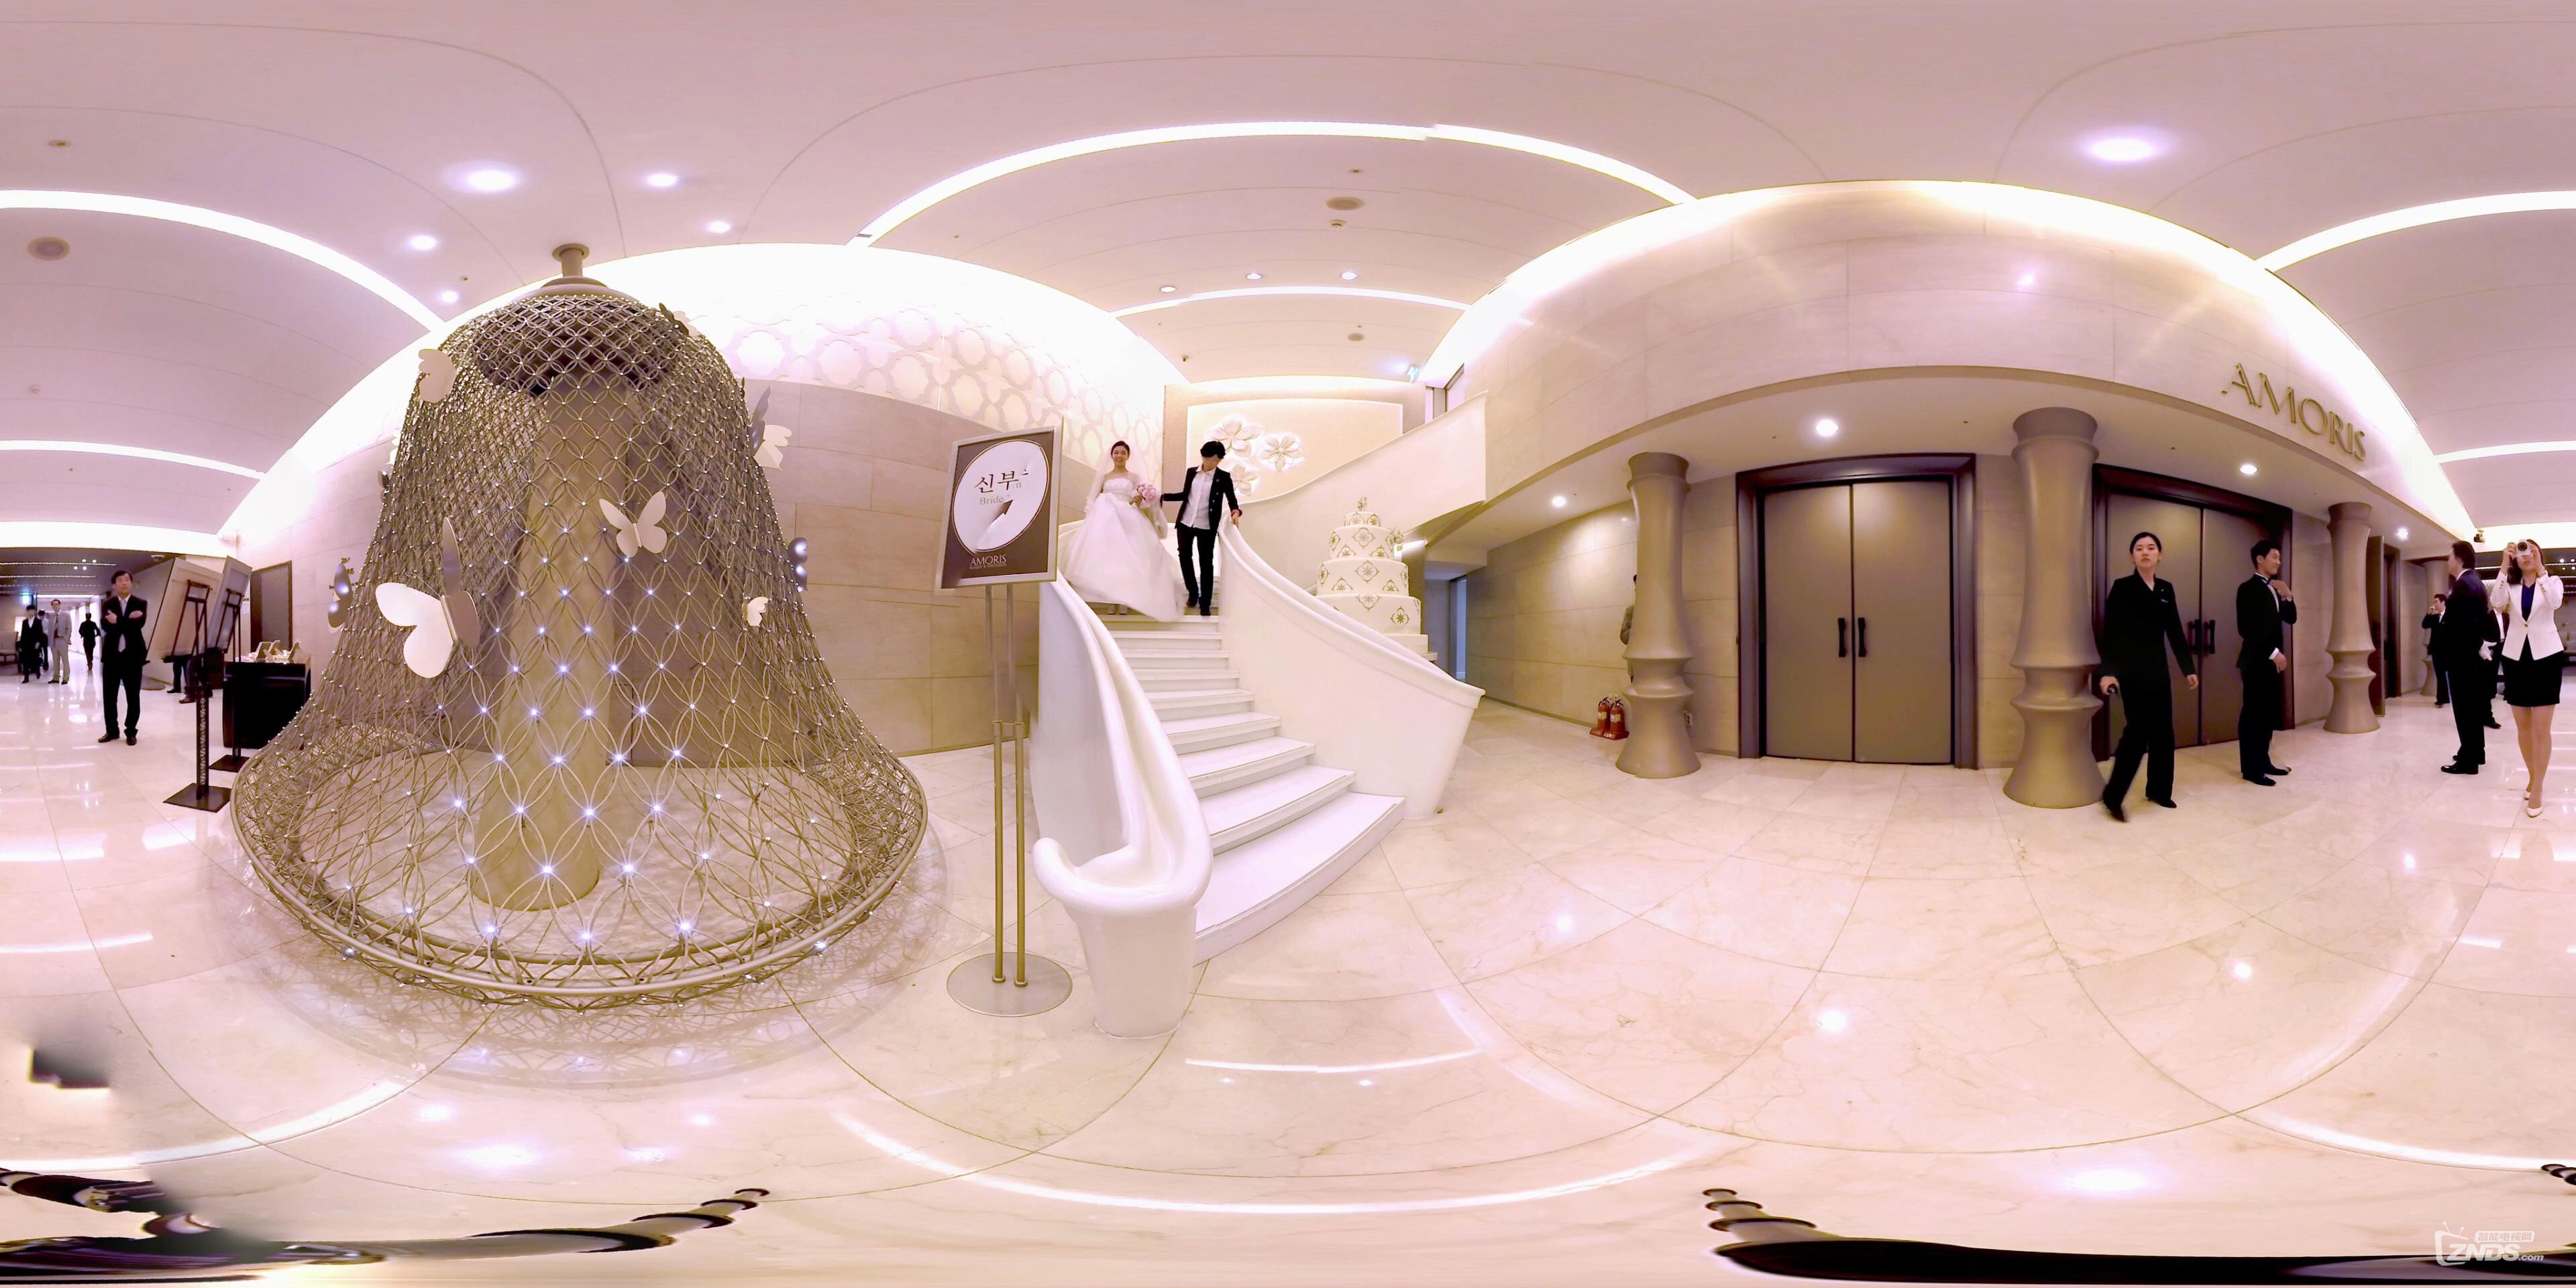 【360度VR全景视频】前往婚礼现场_VR视频下